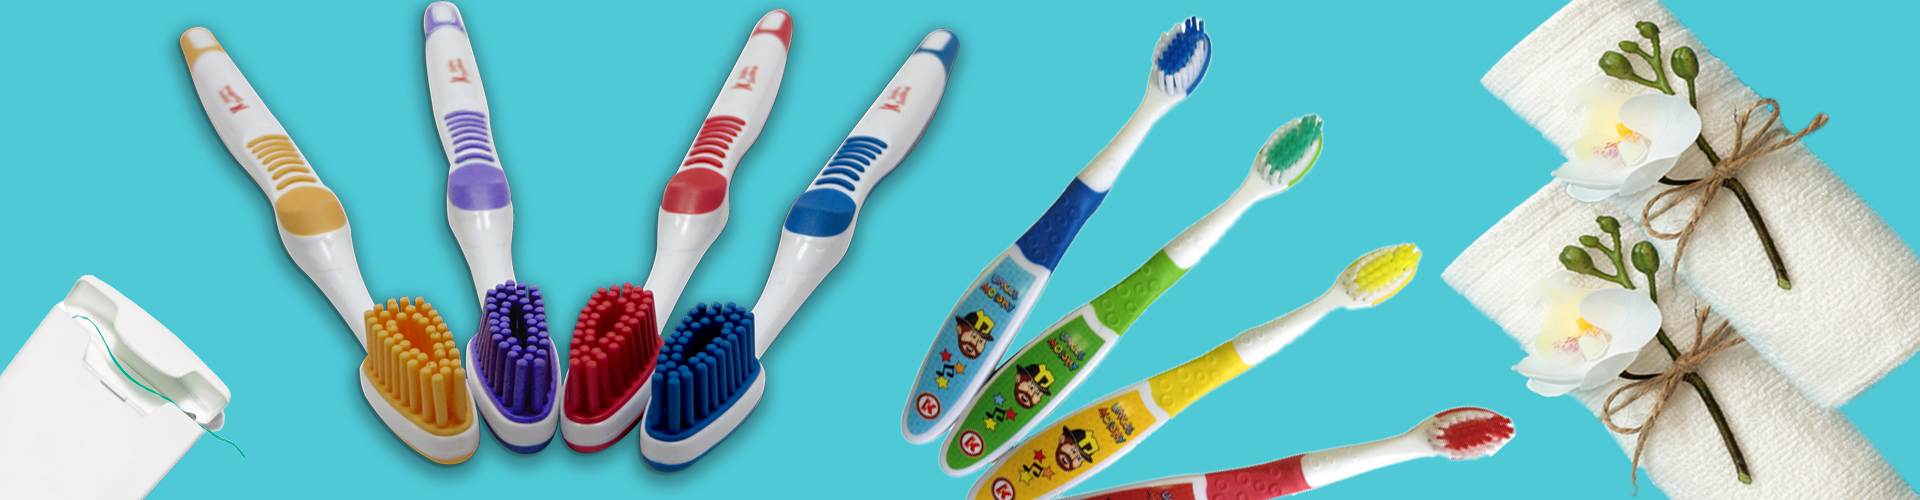 Toothbrush_banner